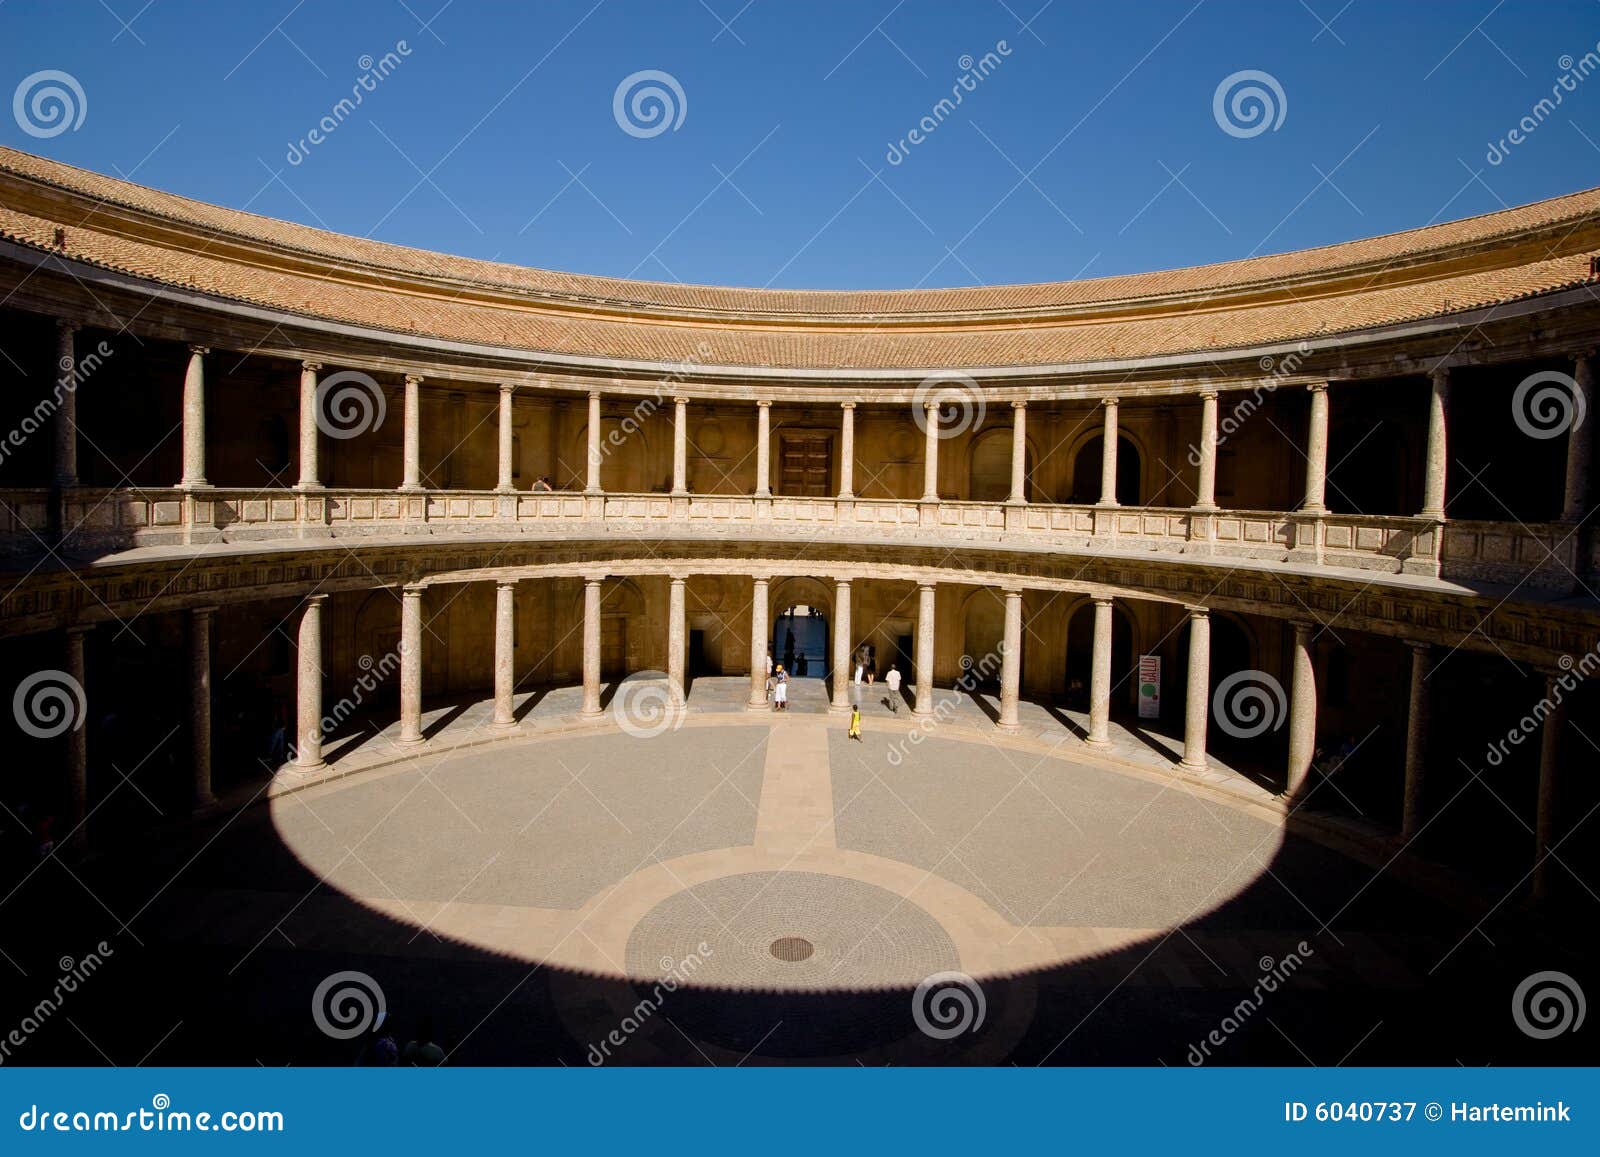 palace of carlos in alhambra, granada, spain